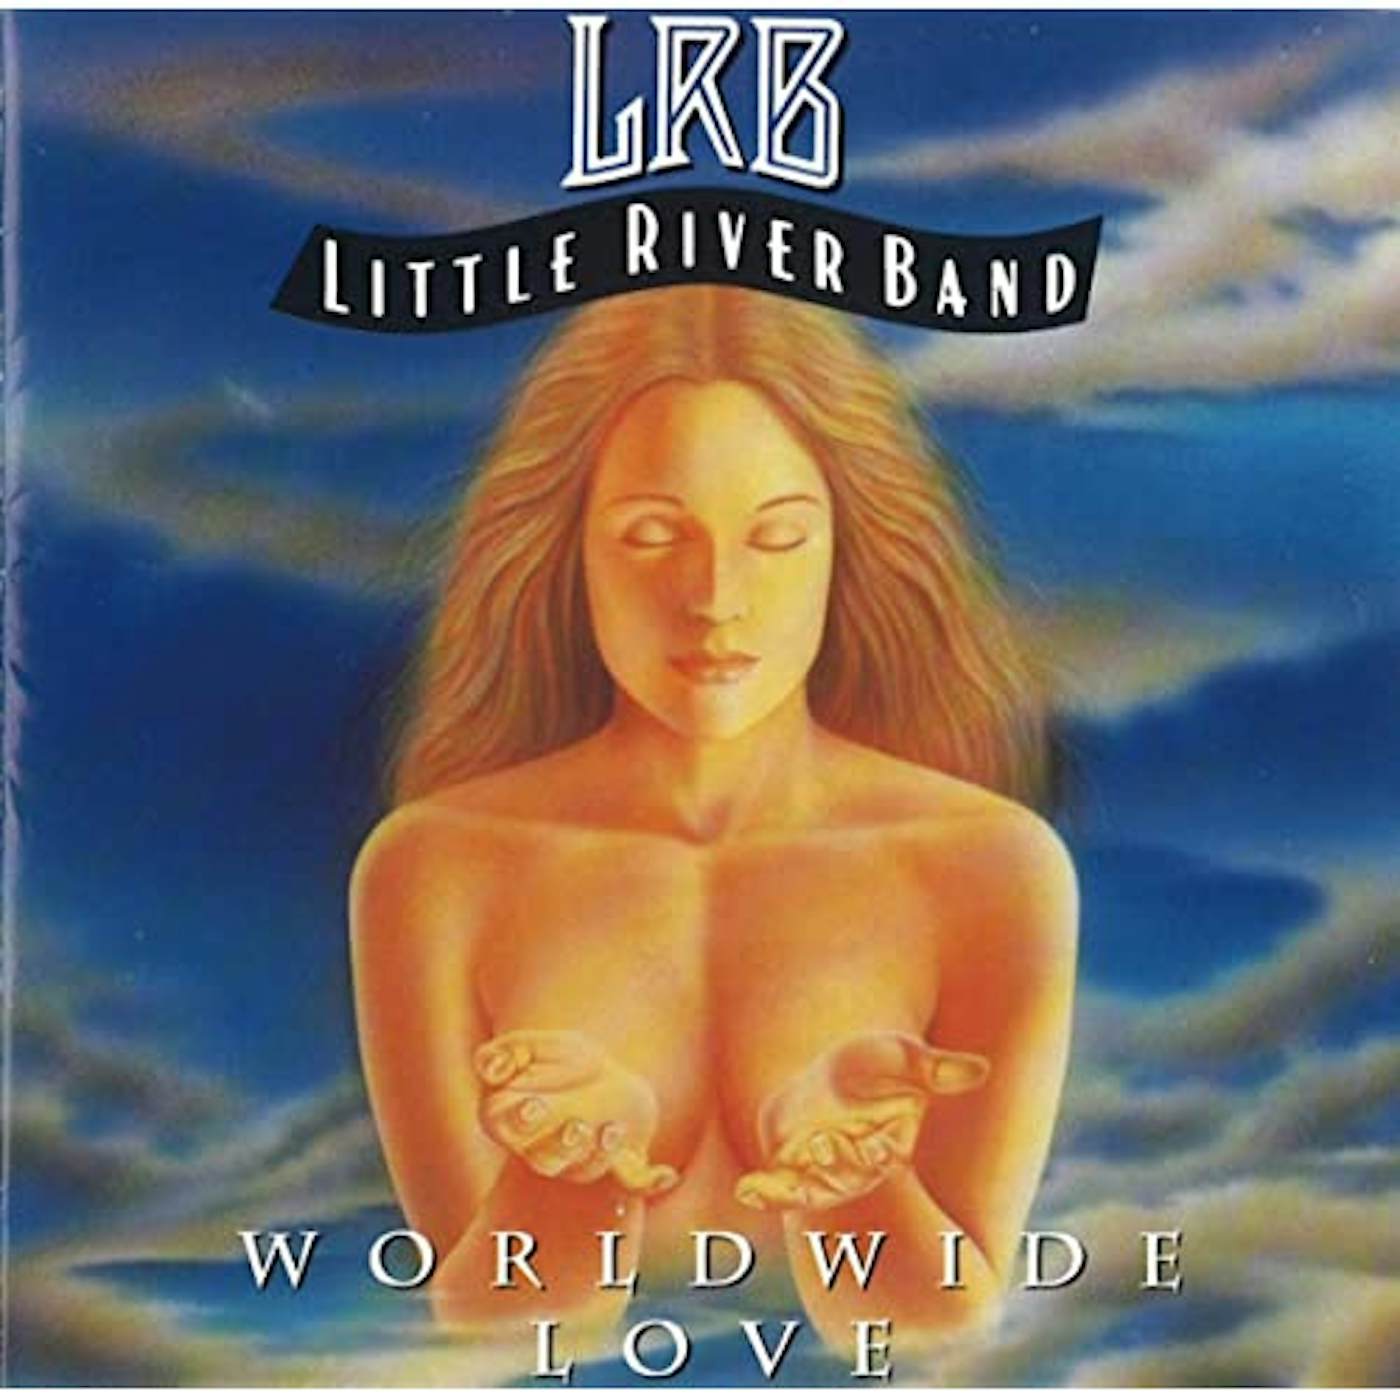 Little River Band WORLDWIDE LOVE CD